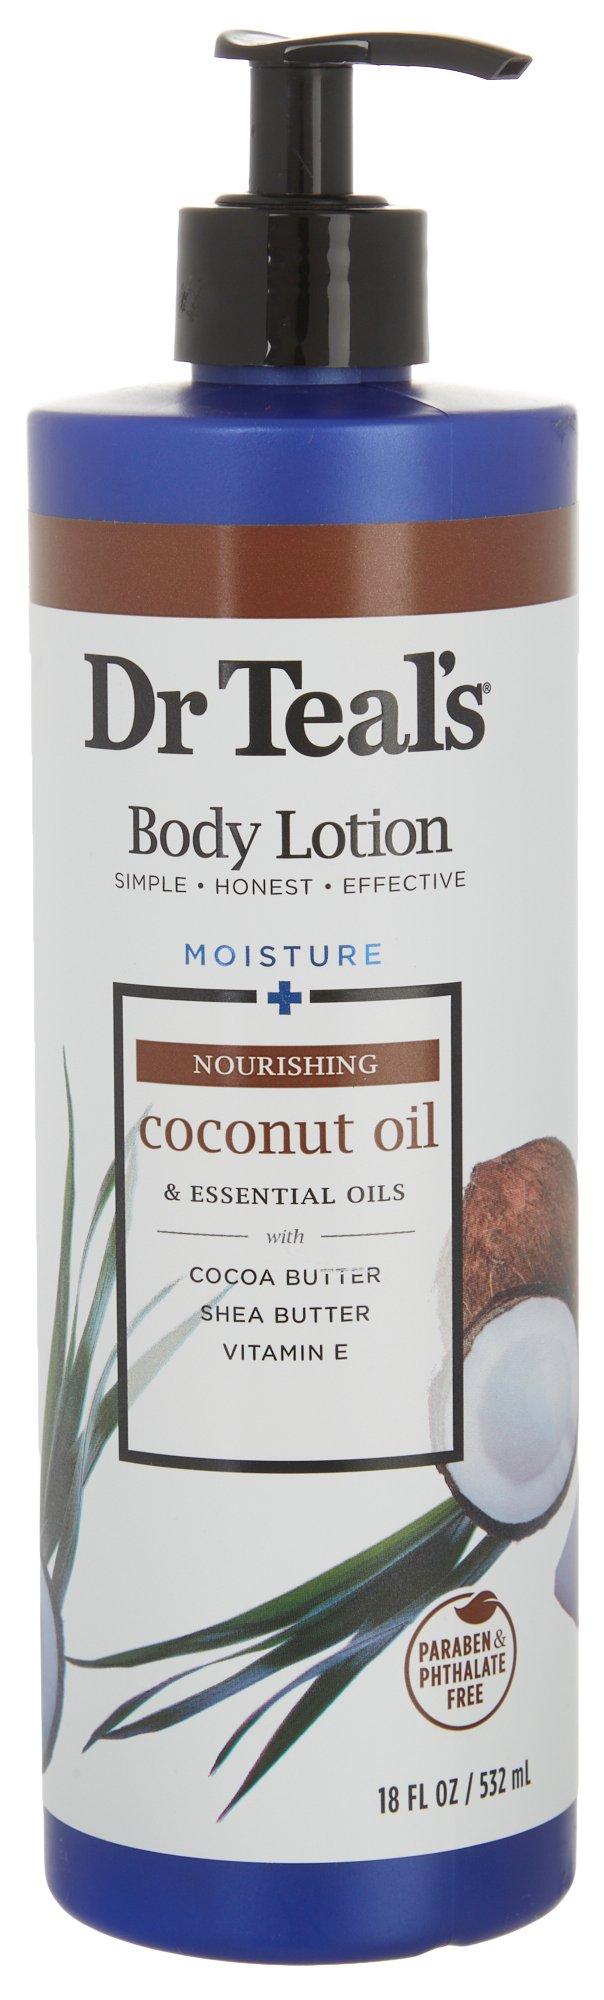 18 Fl. Oz. Nourishing Coconut Oil Body Lotion